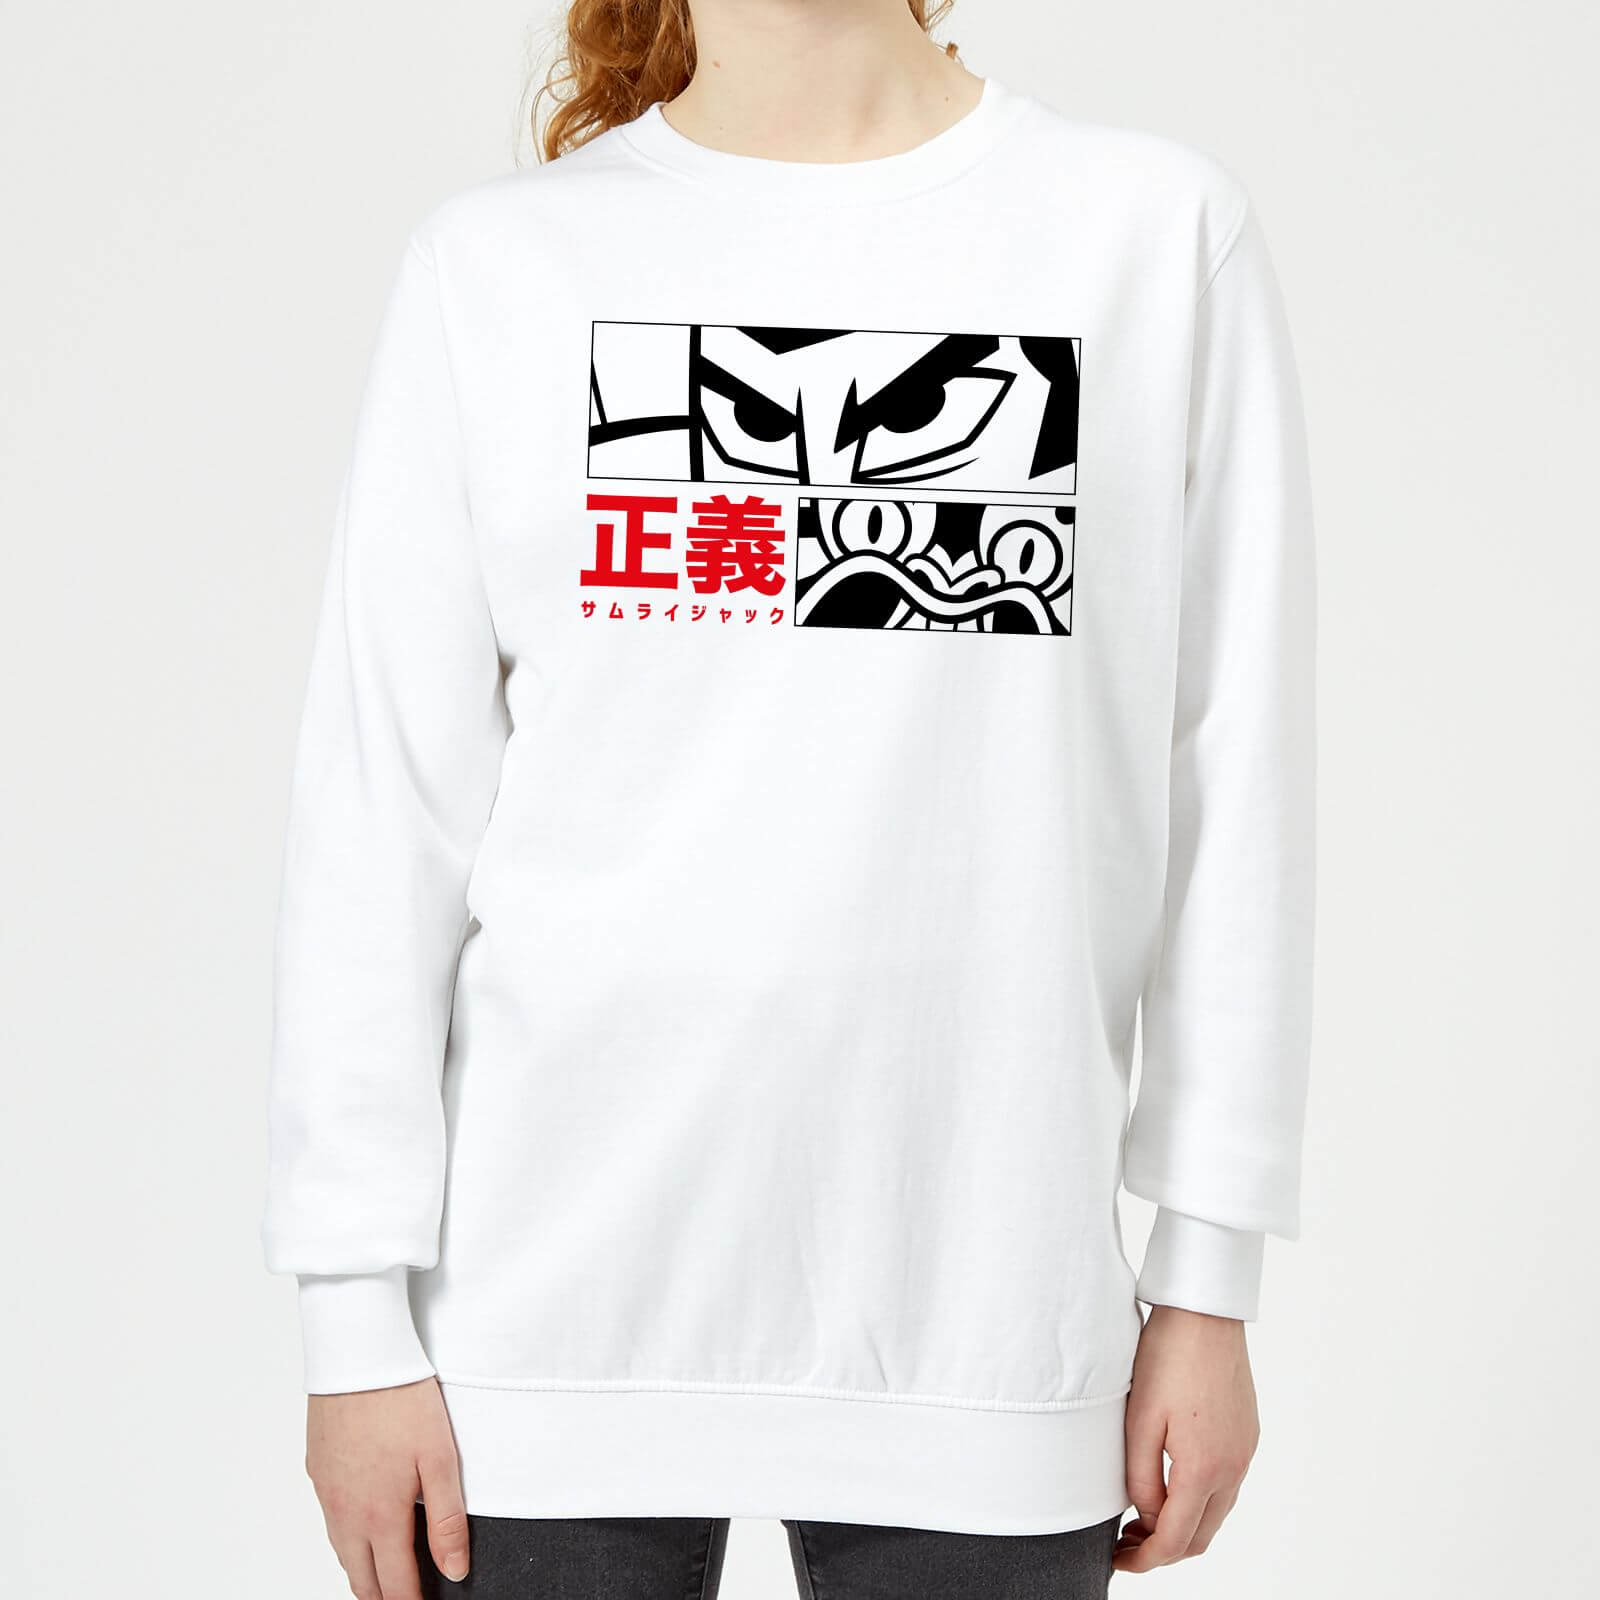 Samurai Jack Arch Nemesis Women's Sweatshirt - White - XS - White